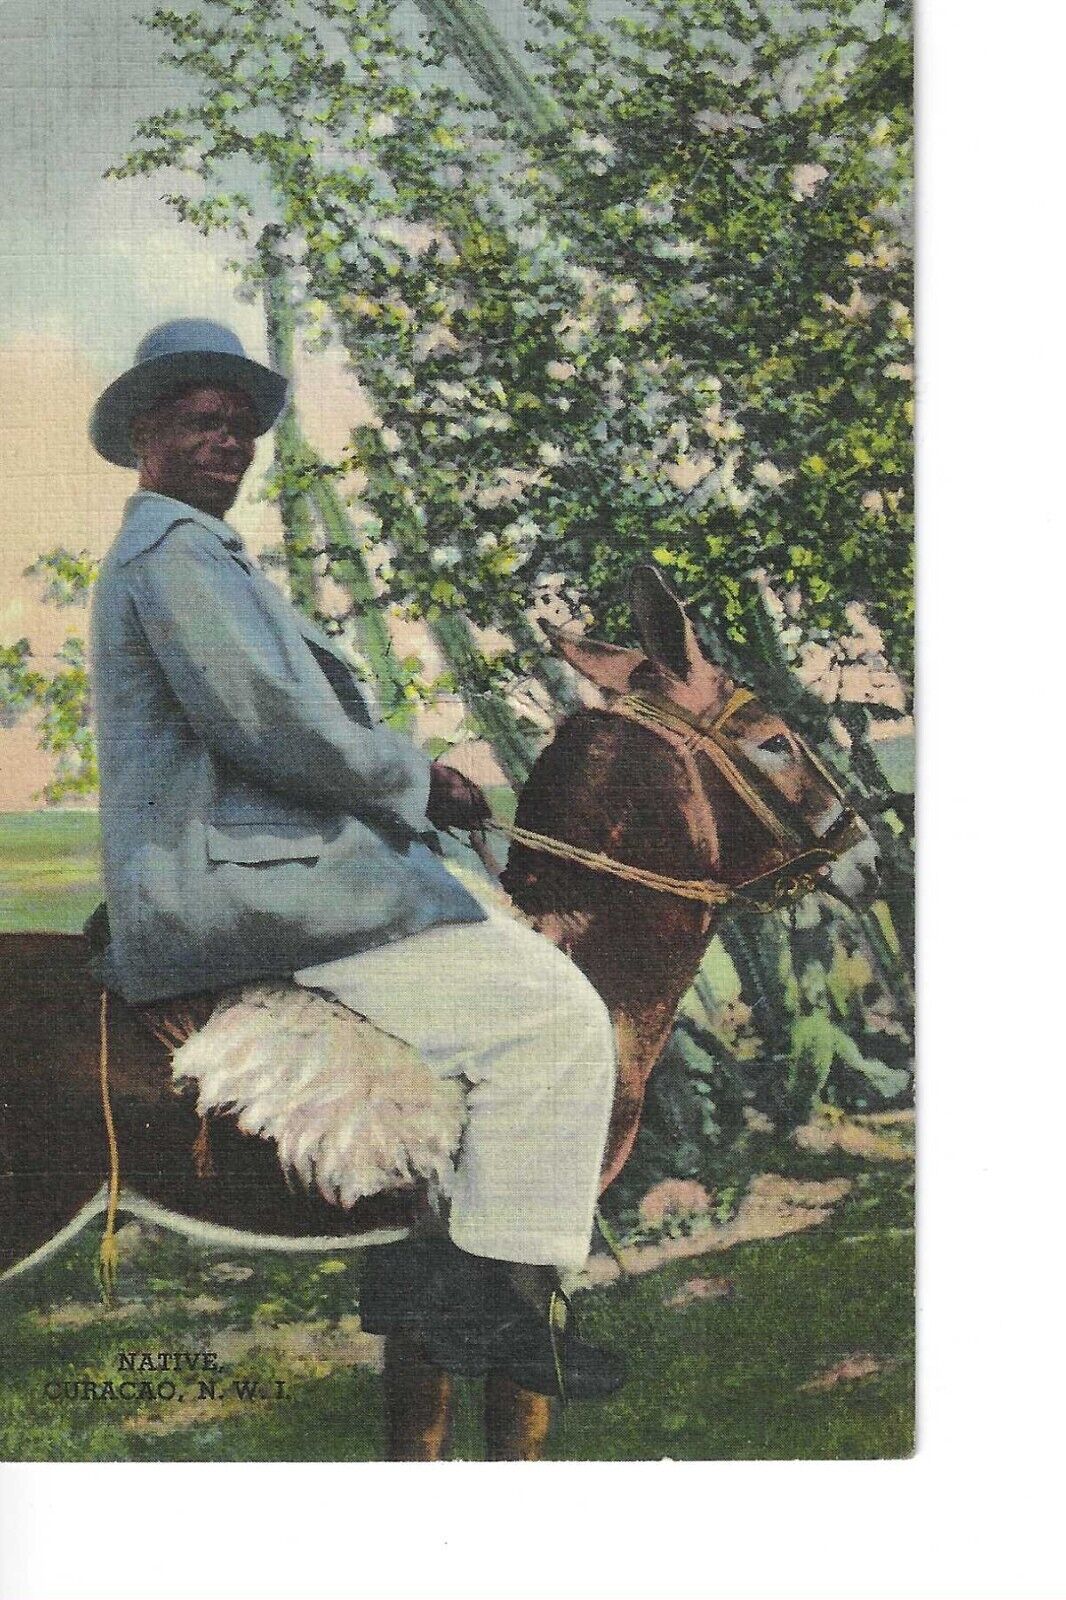 Rare Vintage Used Postcard, 1948 Native on Donkey, Native Curacao, N.W.I., 